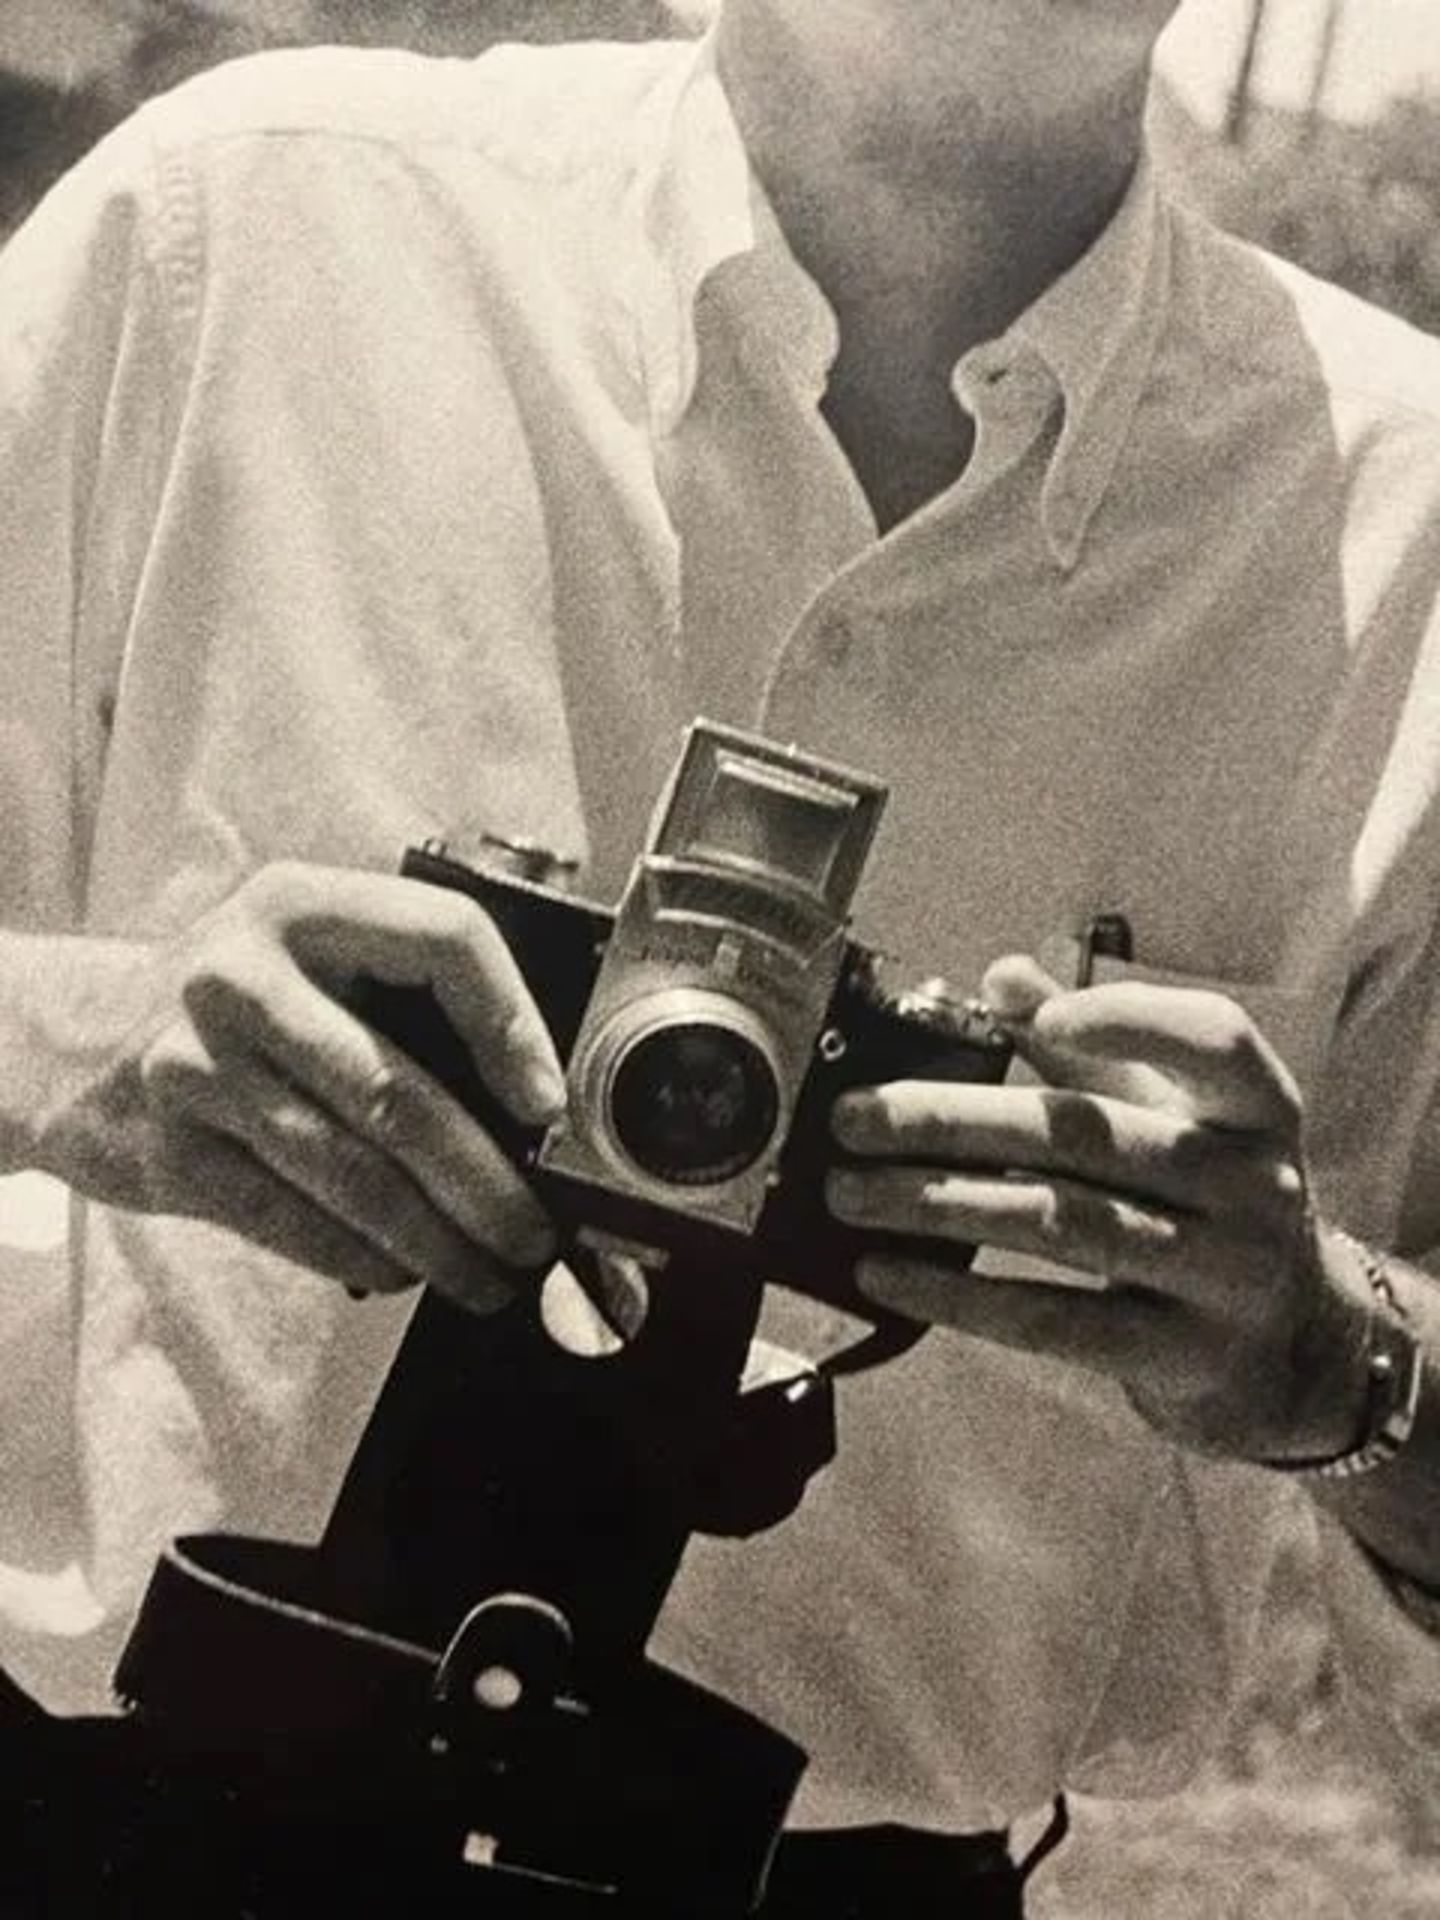 Dennis Hopper "Camera, Self-Portrait" Print - Image 6 of 6